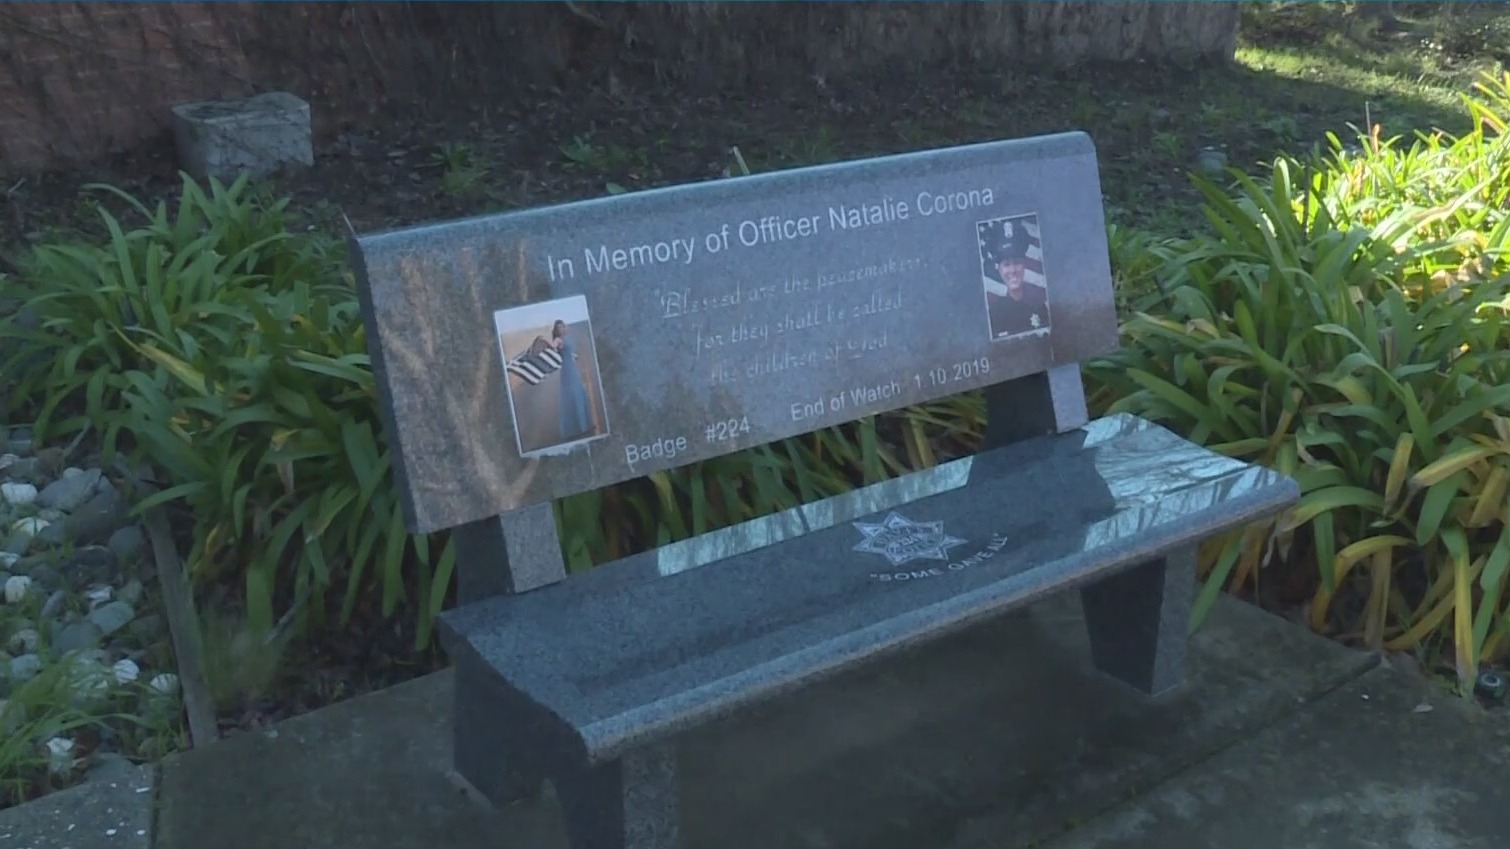 Flowers Left At Memorial For Fallen Davis Police Officer Natalie Corona On Anniversary Of Death